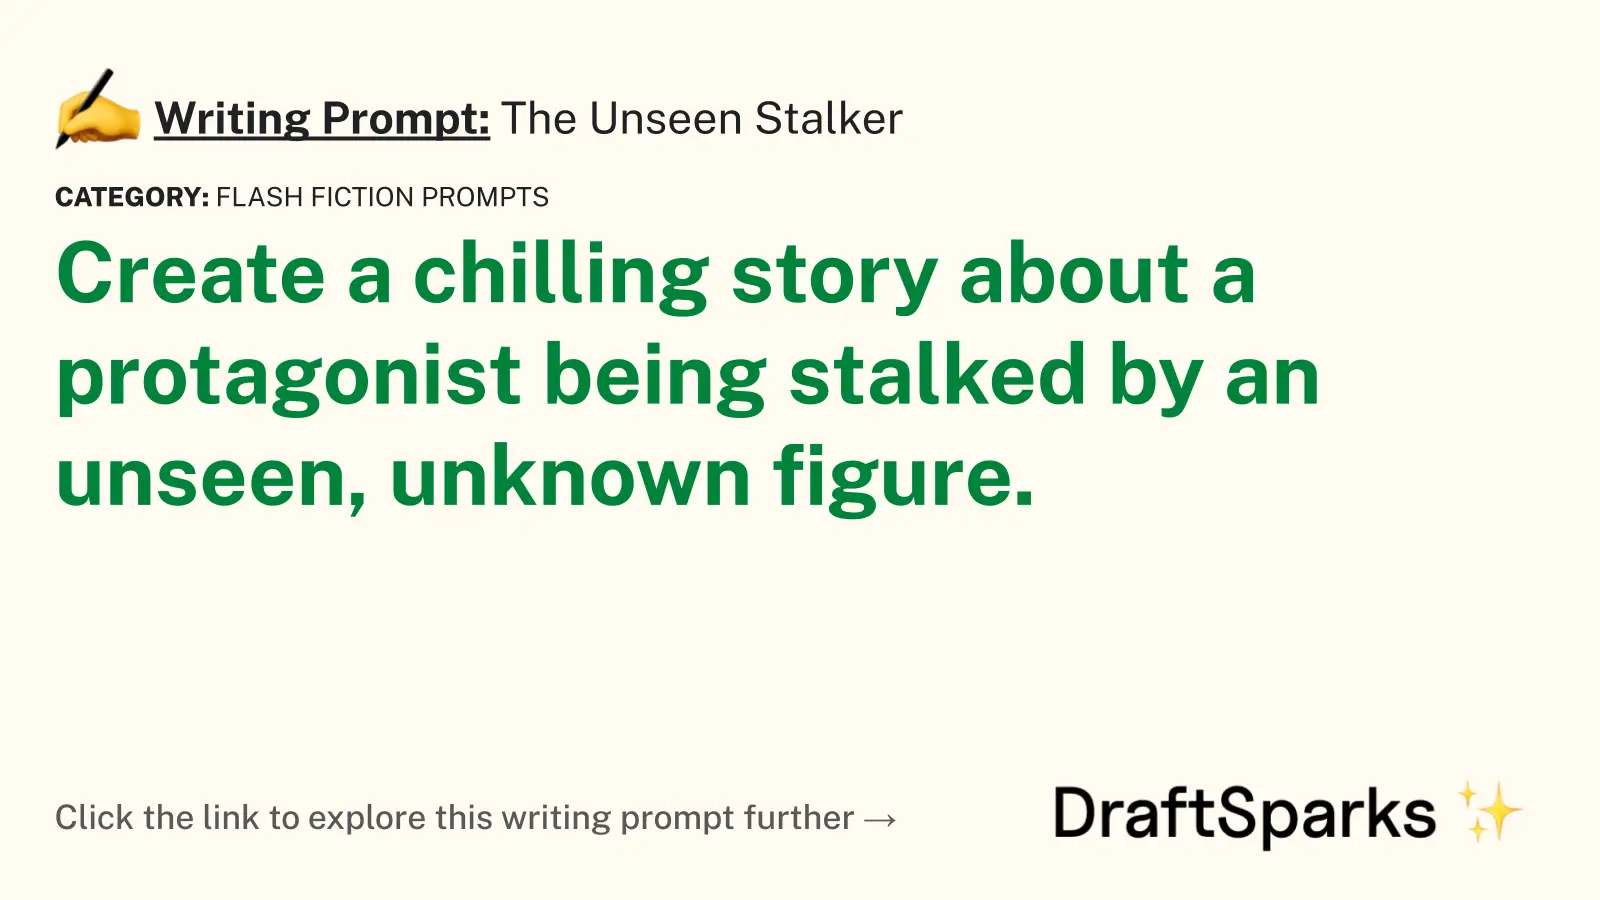 The Unseen Stalker